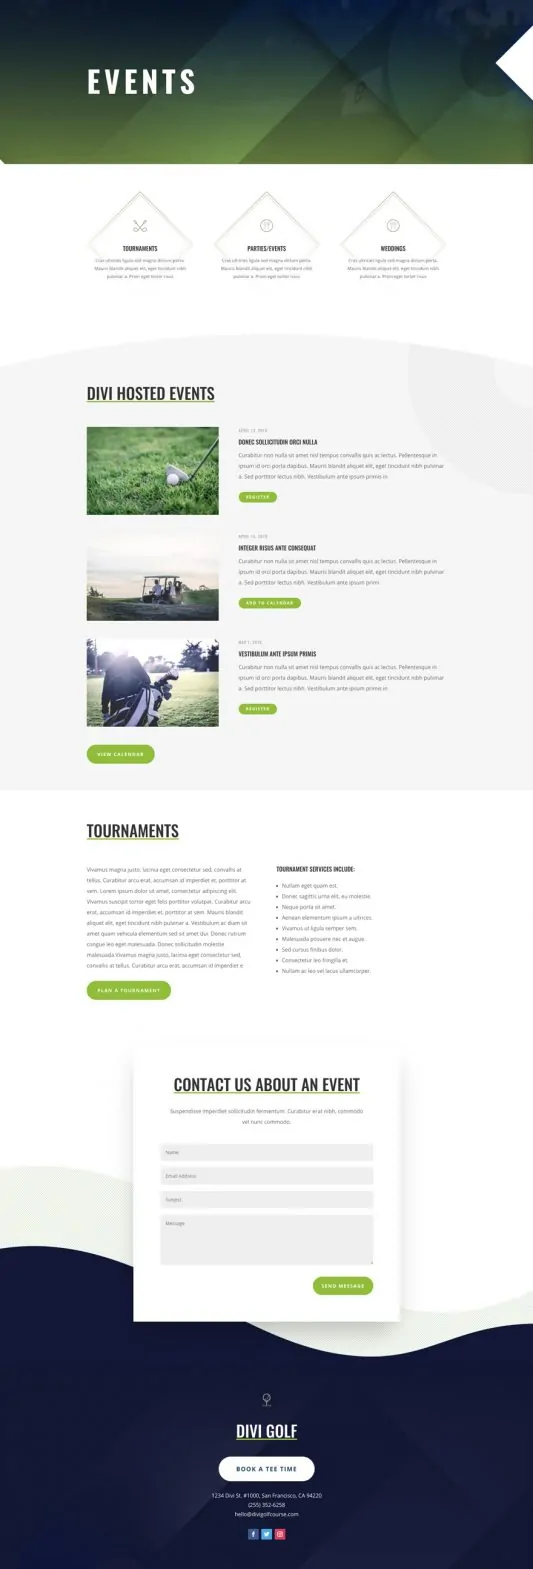 Golf Course Web Design 5